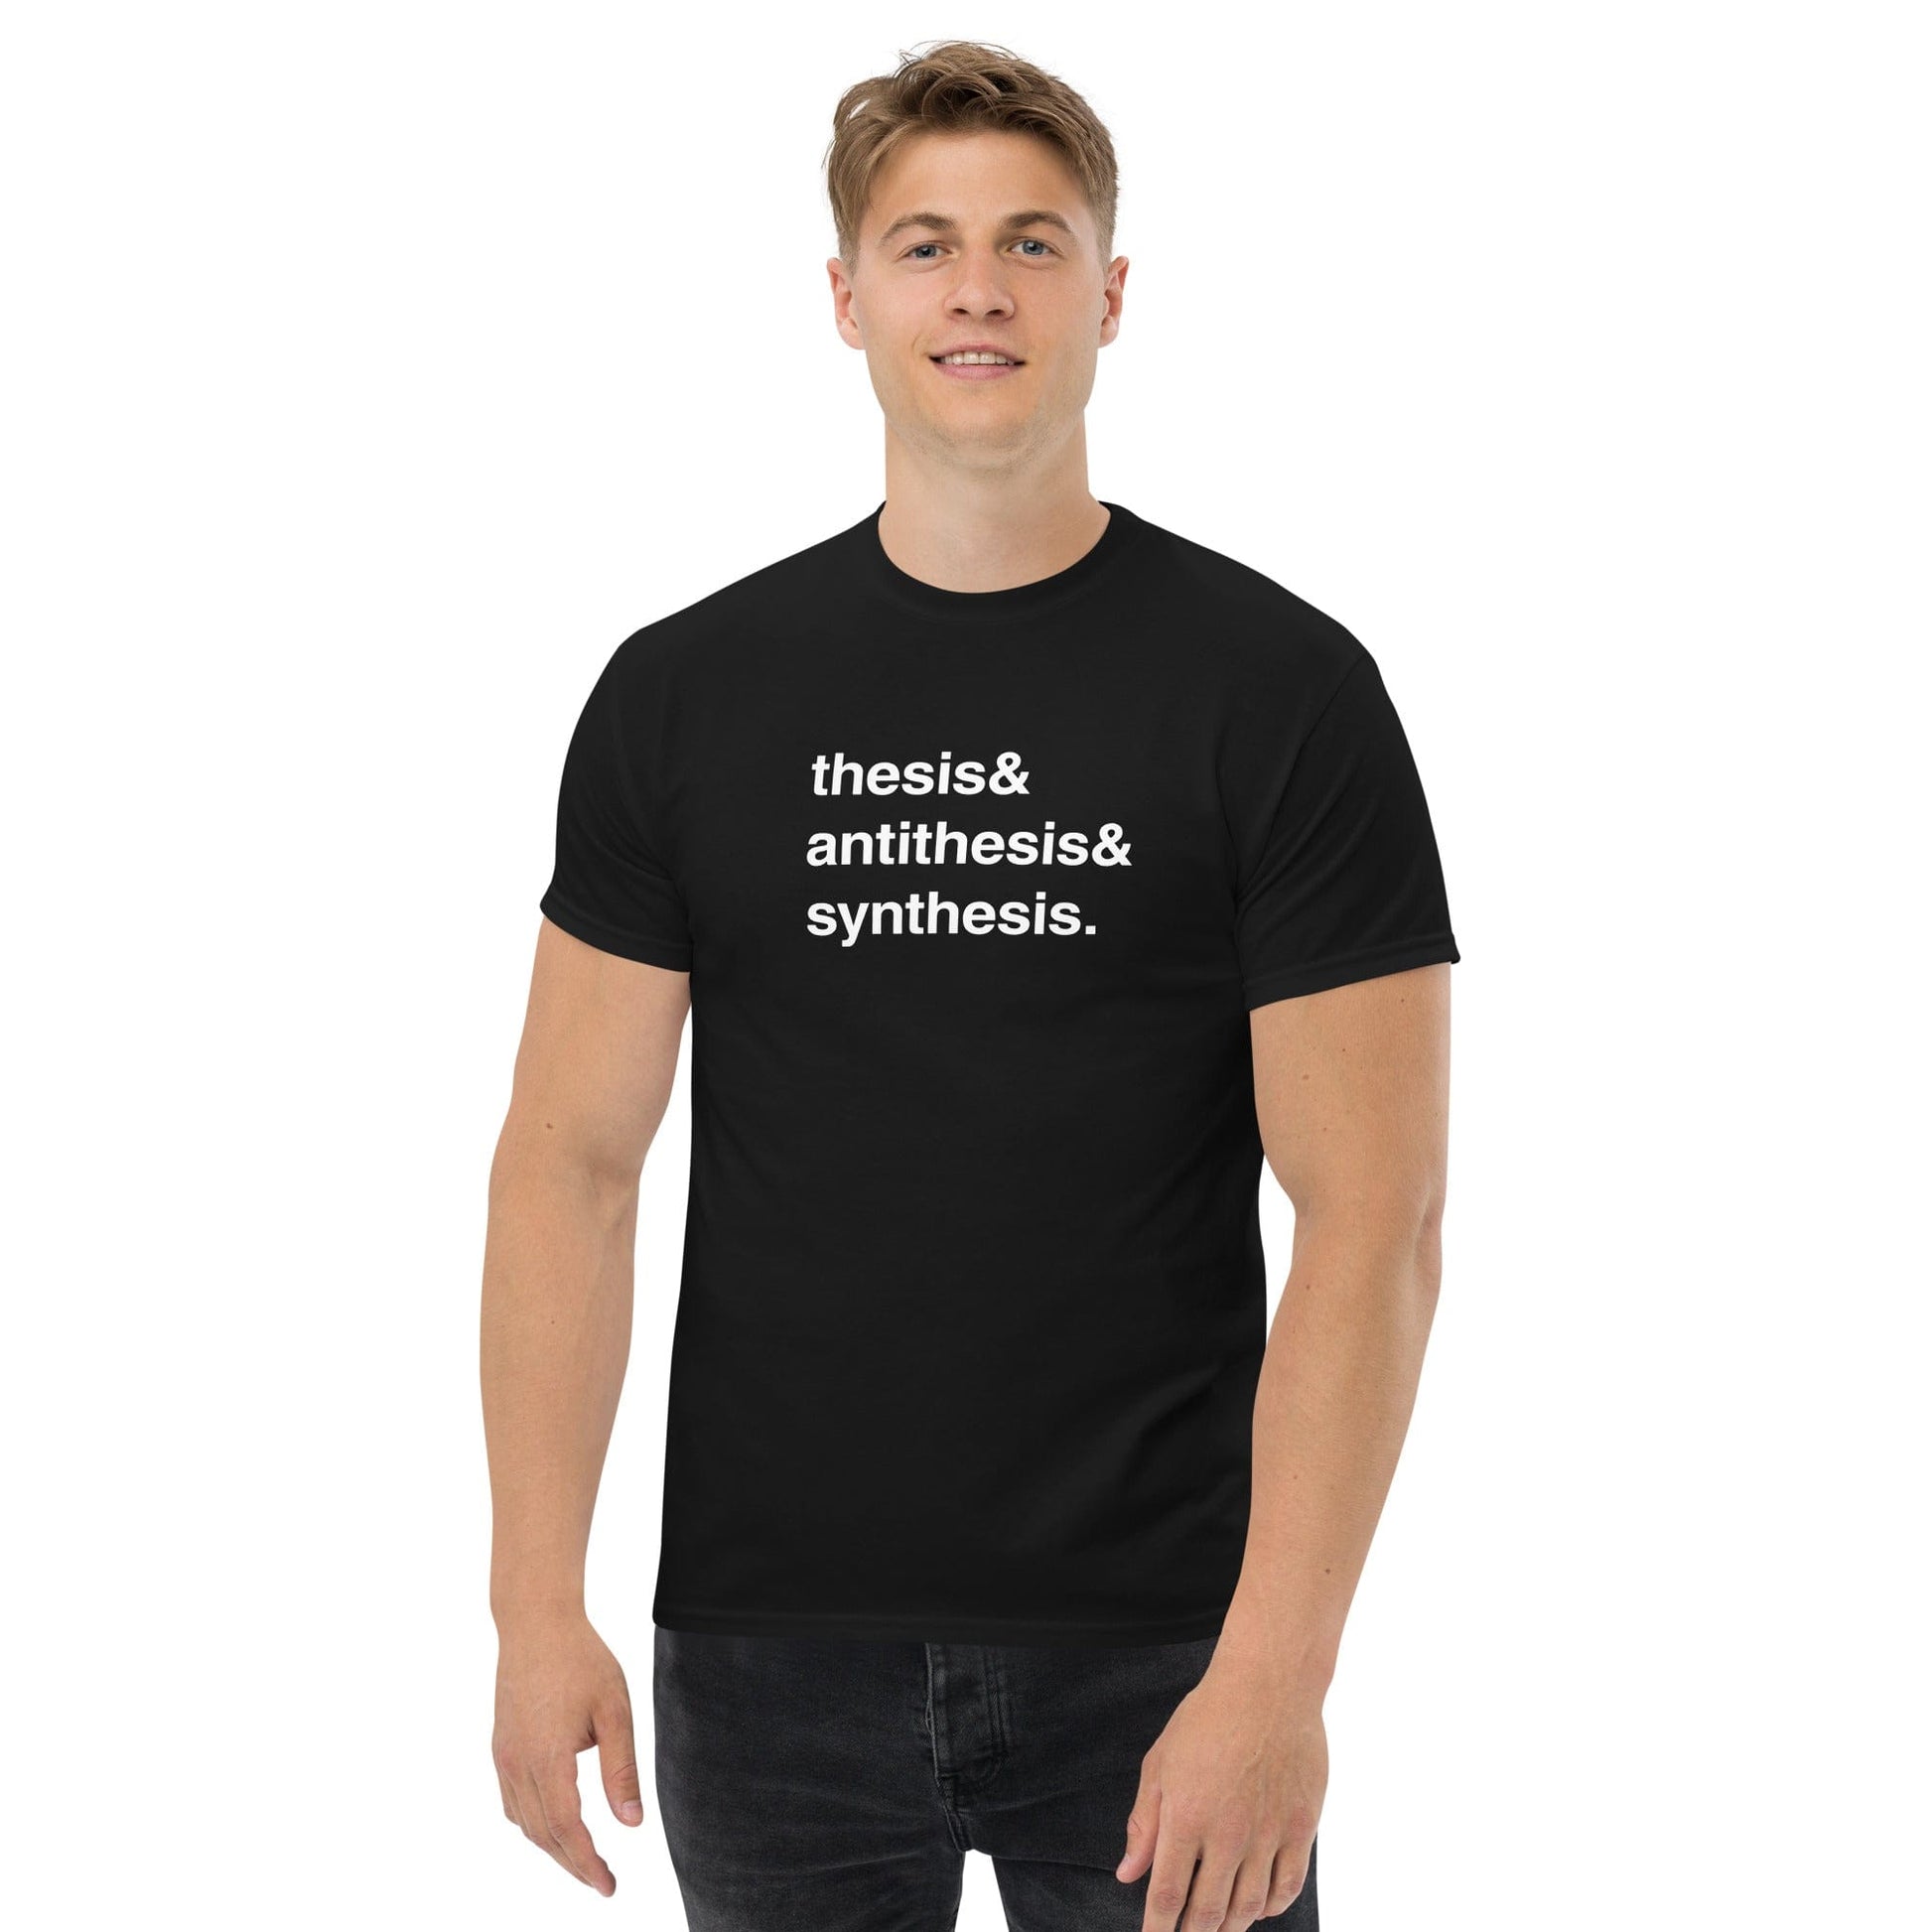 Thesis & Antithesis & Synthesis - Plus-Sized T-Shirt